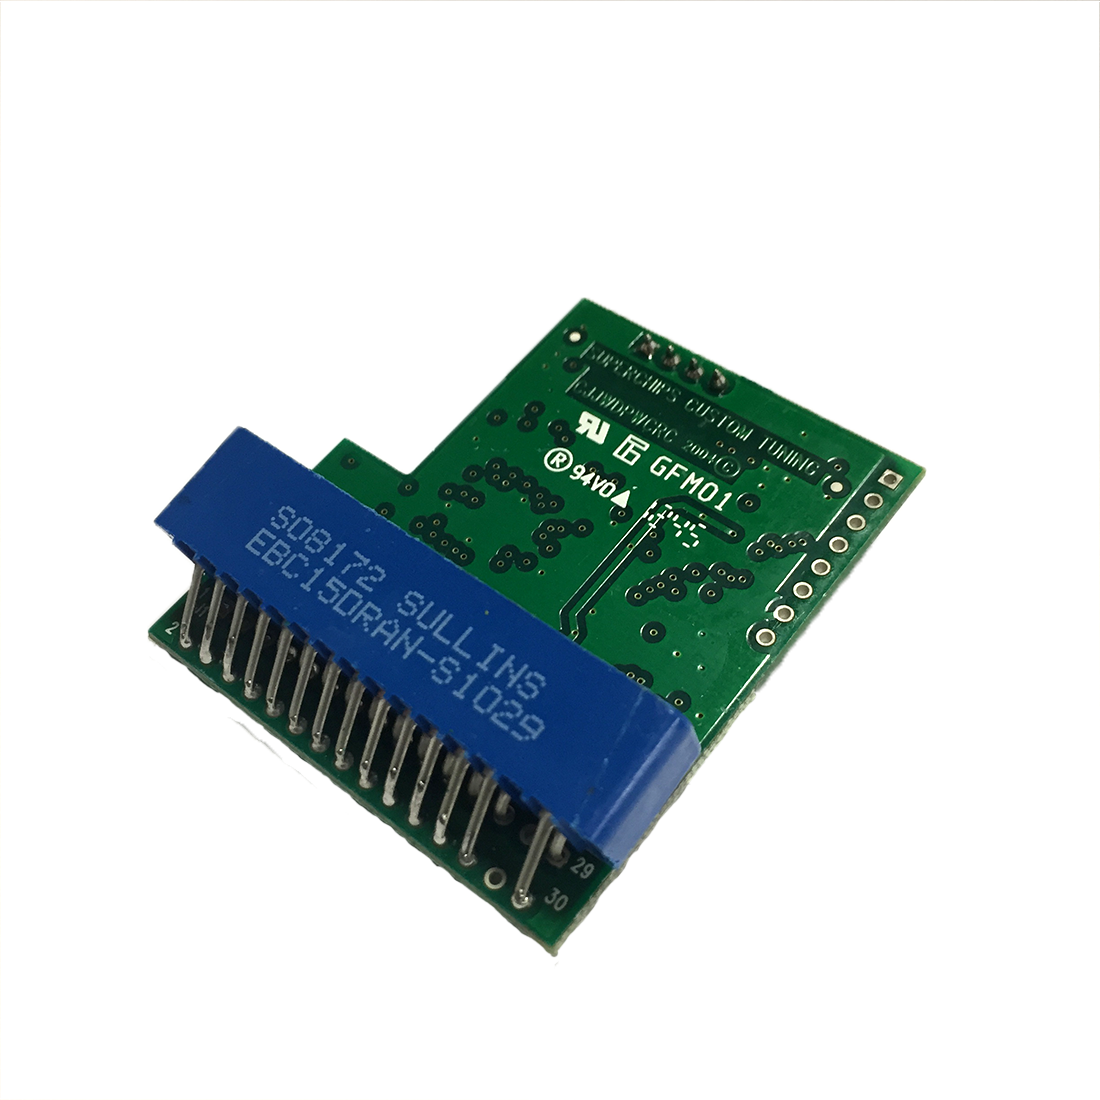 Sct 6600 Eliminator Switch Chip